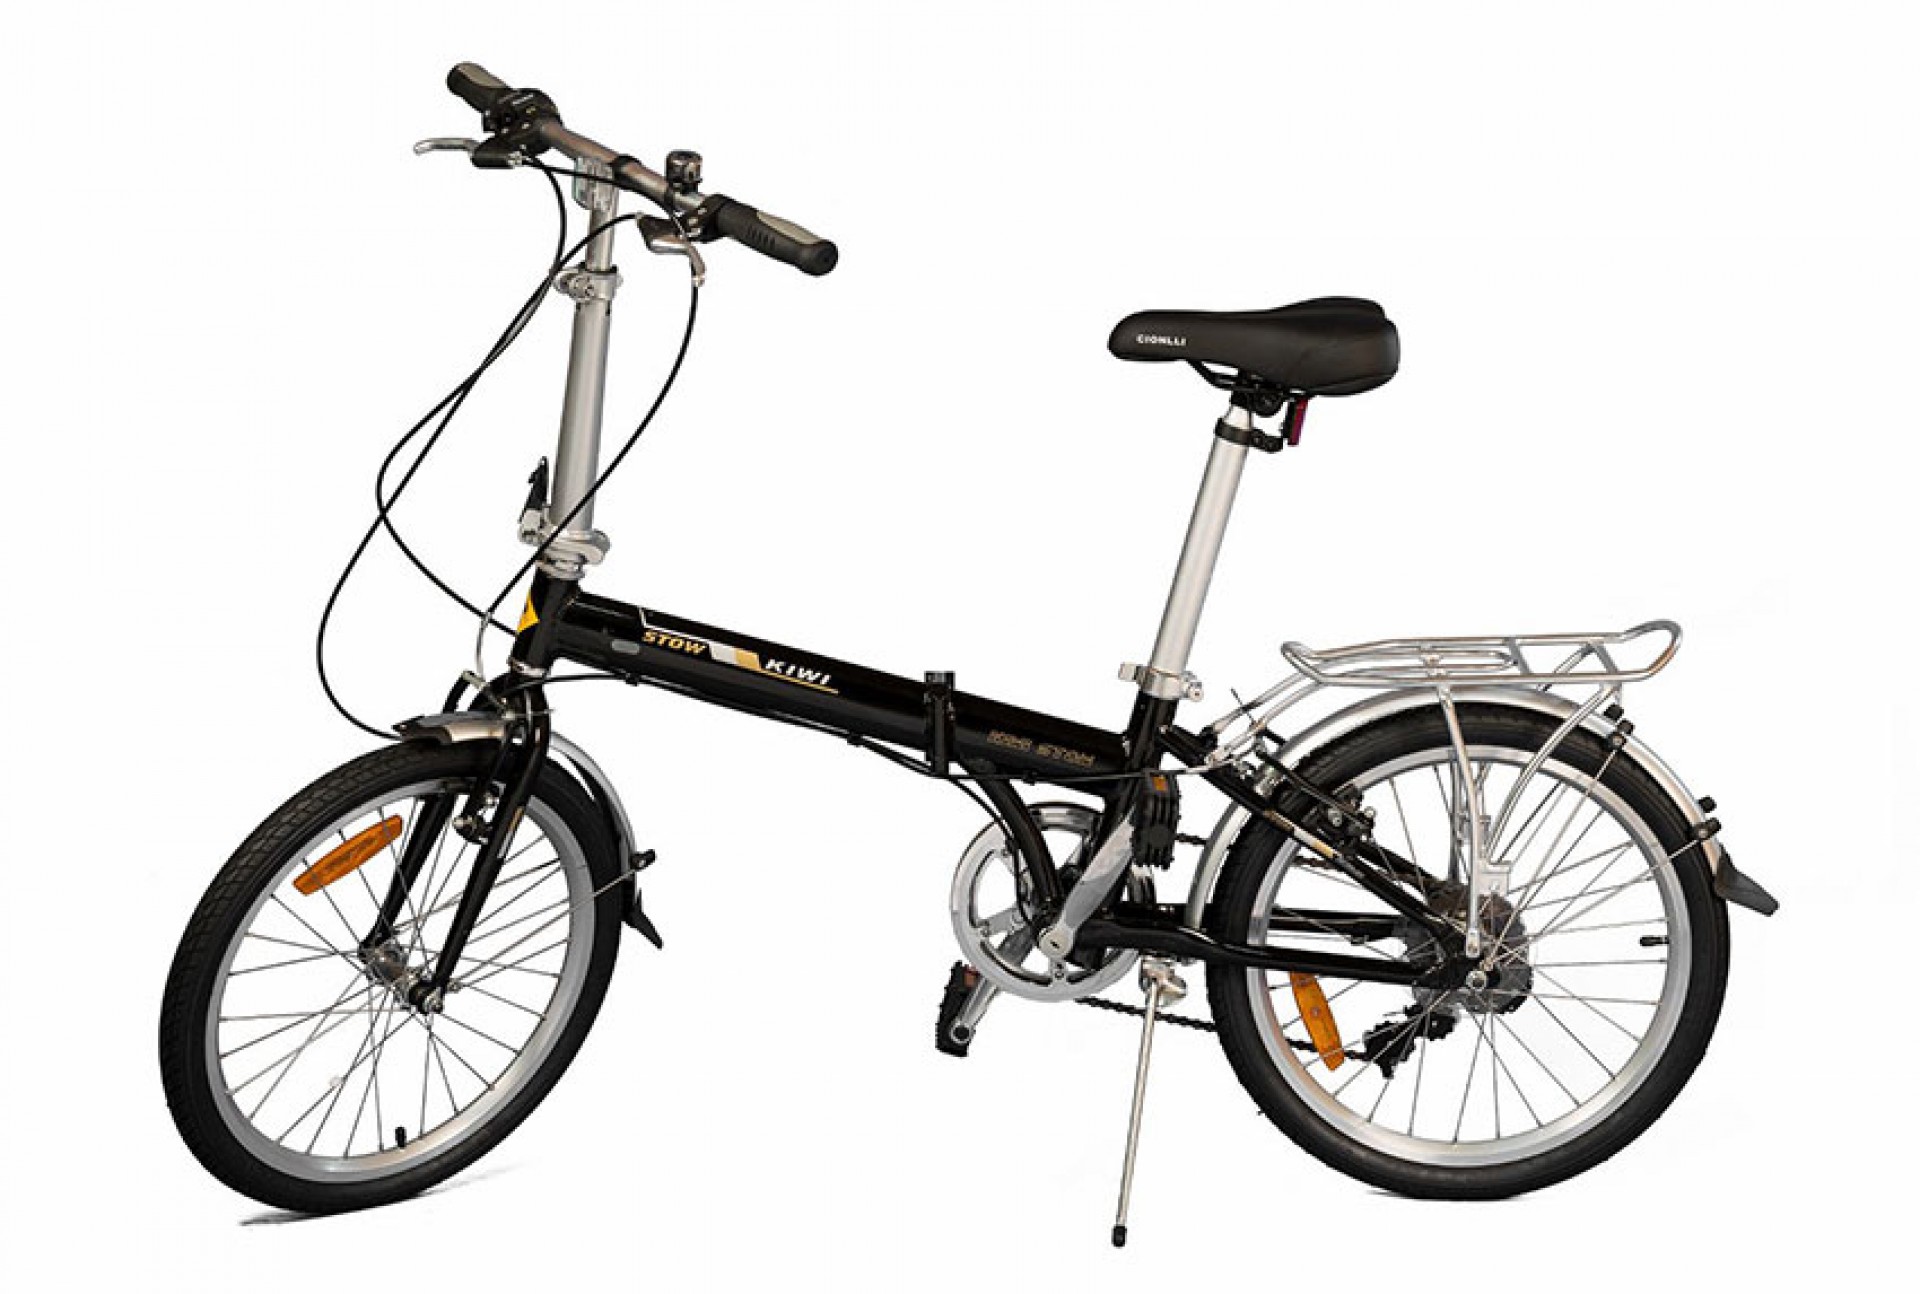 Kiwistow Folding bicycle